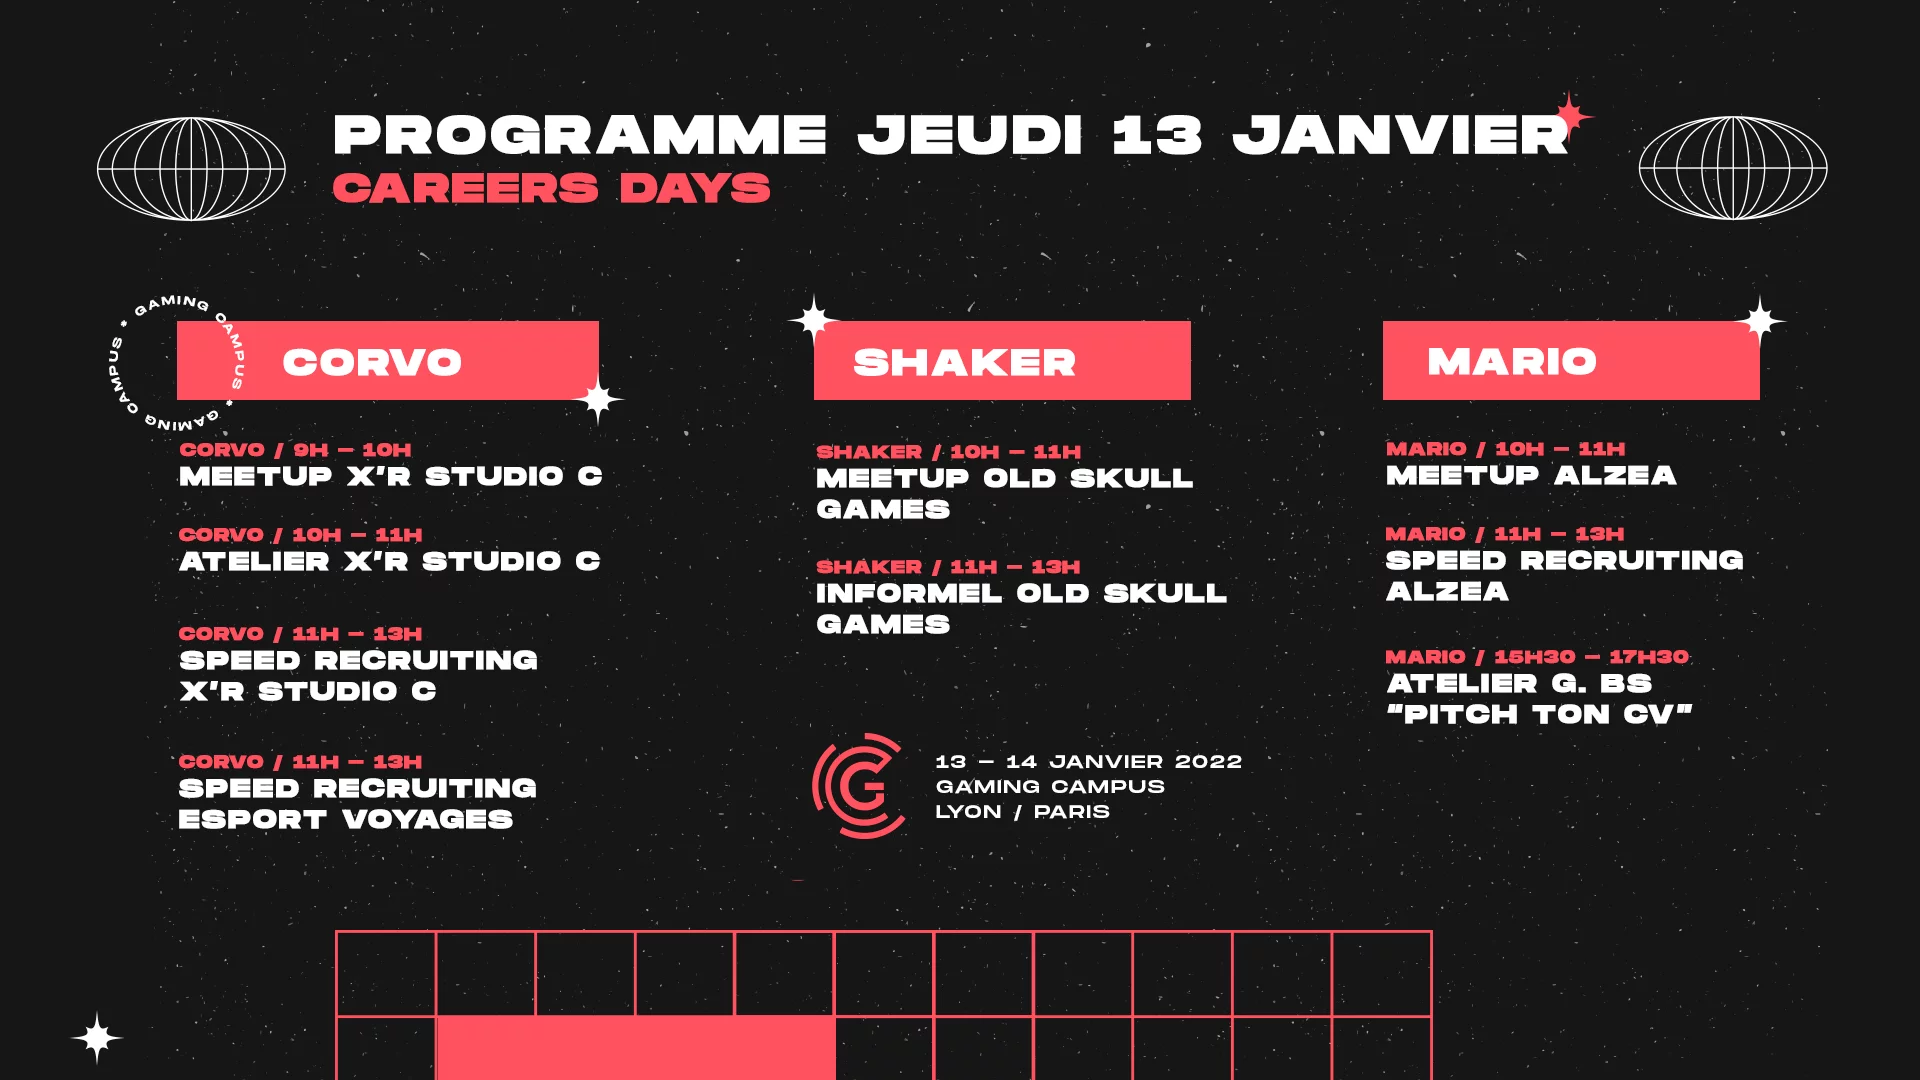 Programme Career Days Gaming Campus Jeudi 13 Janvier 2022